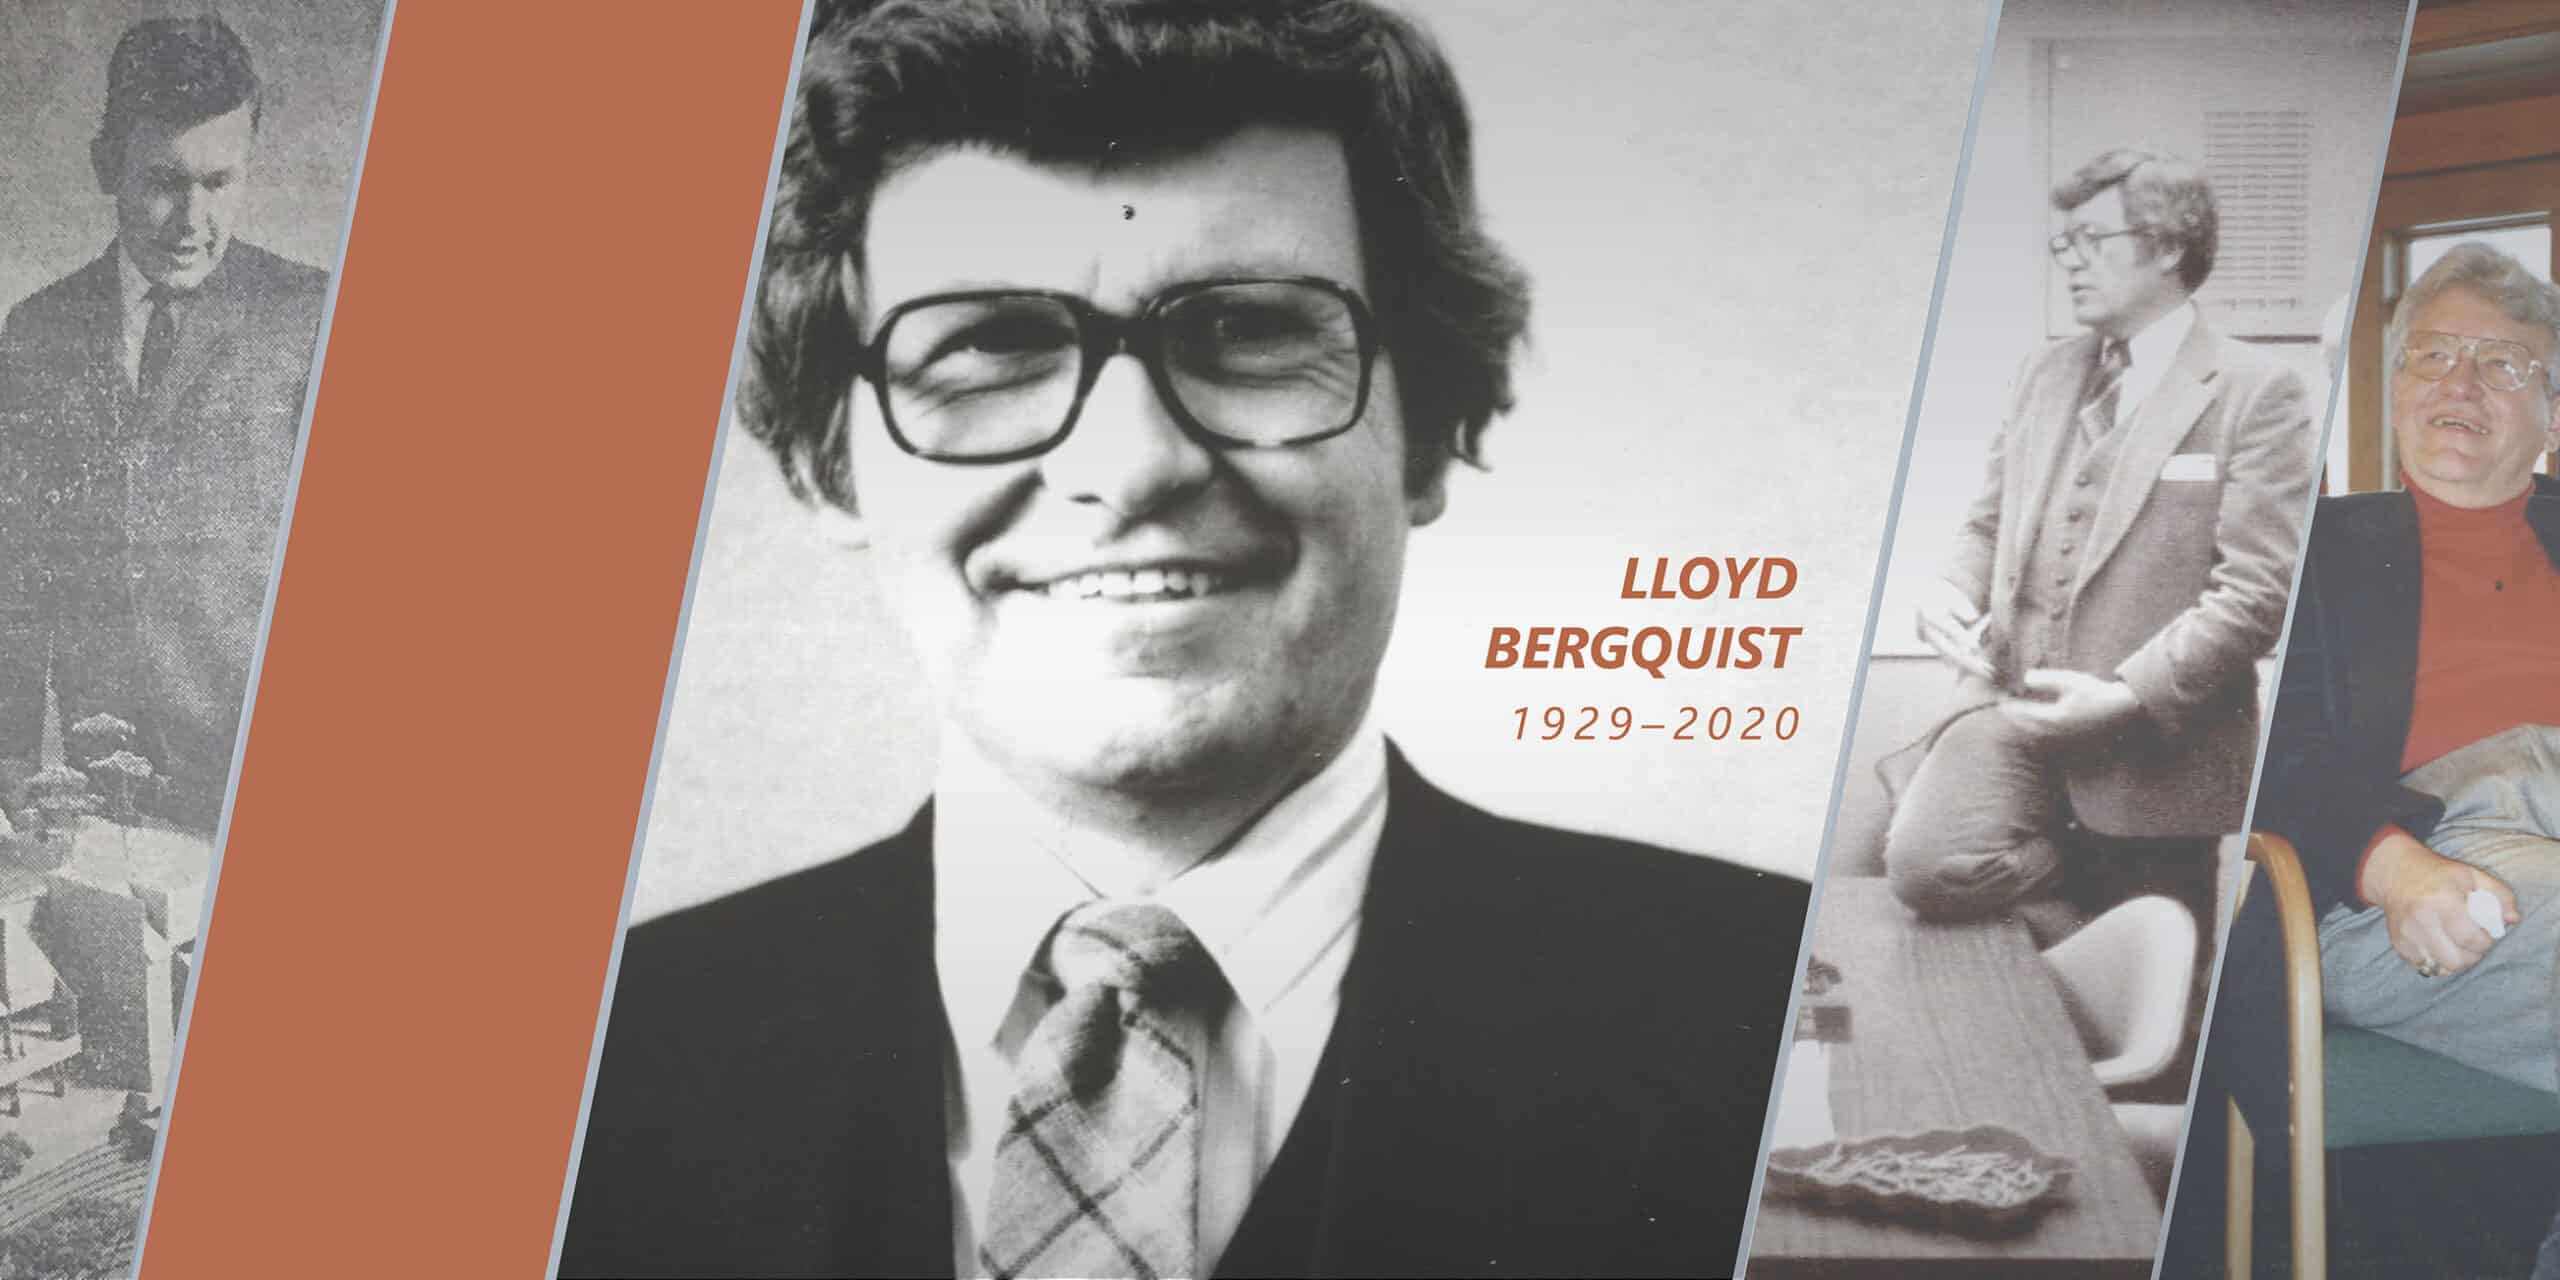 Lloyd Bergquist, the second ‘B’ in BWBR, passes